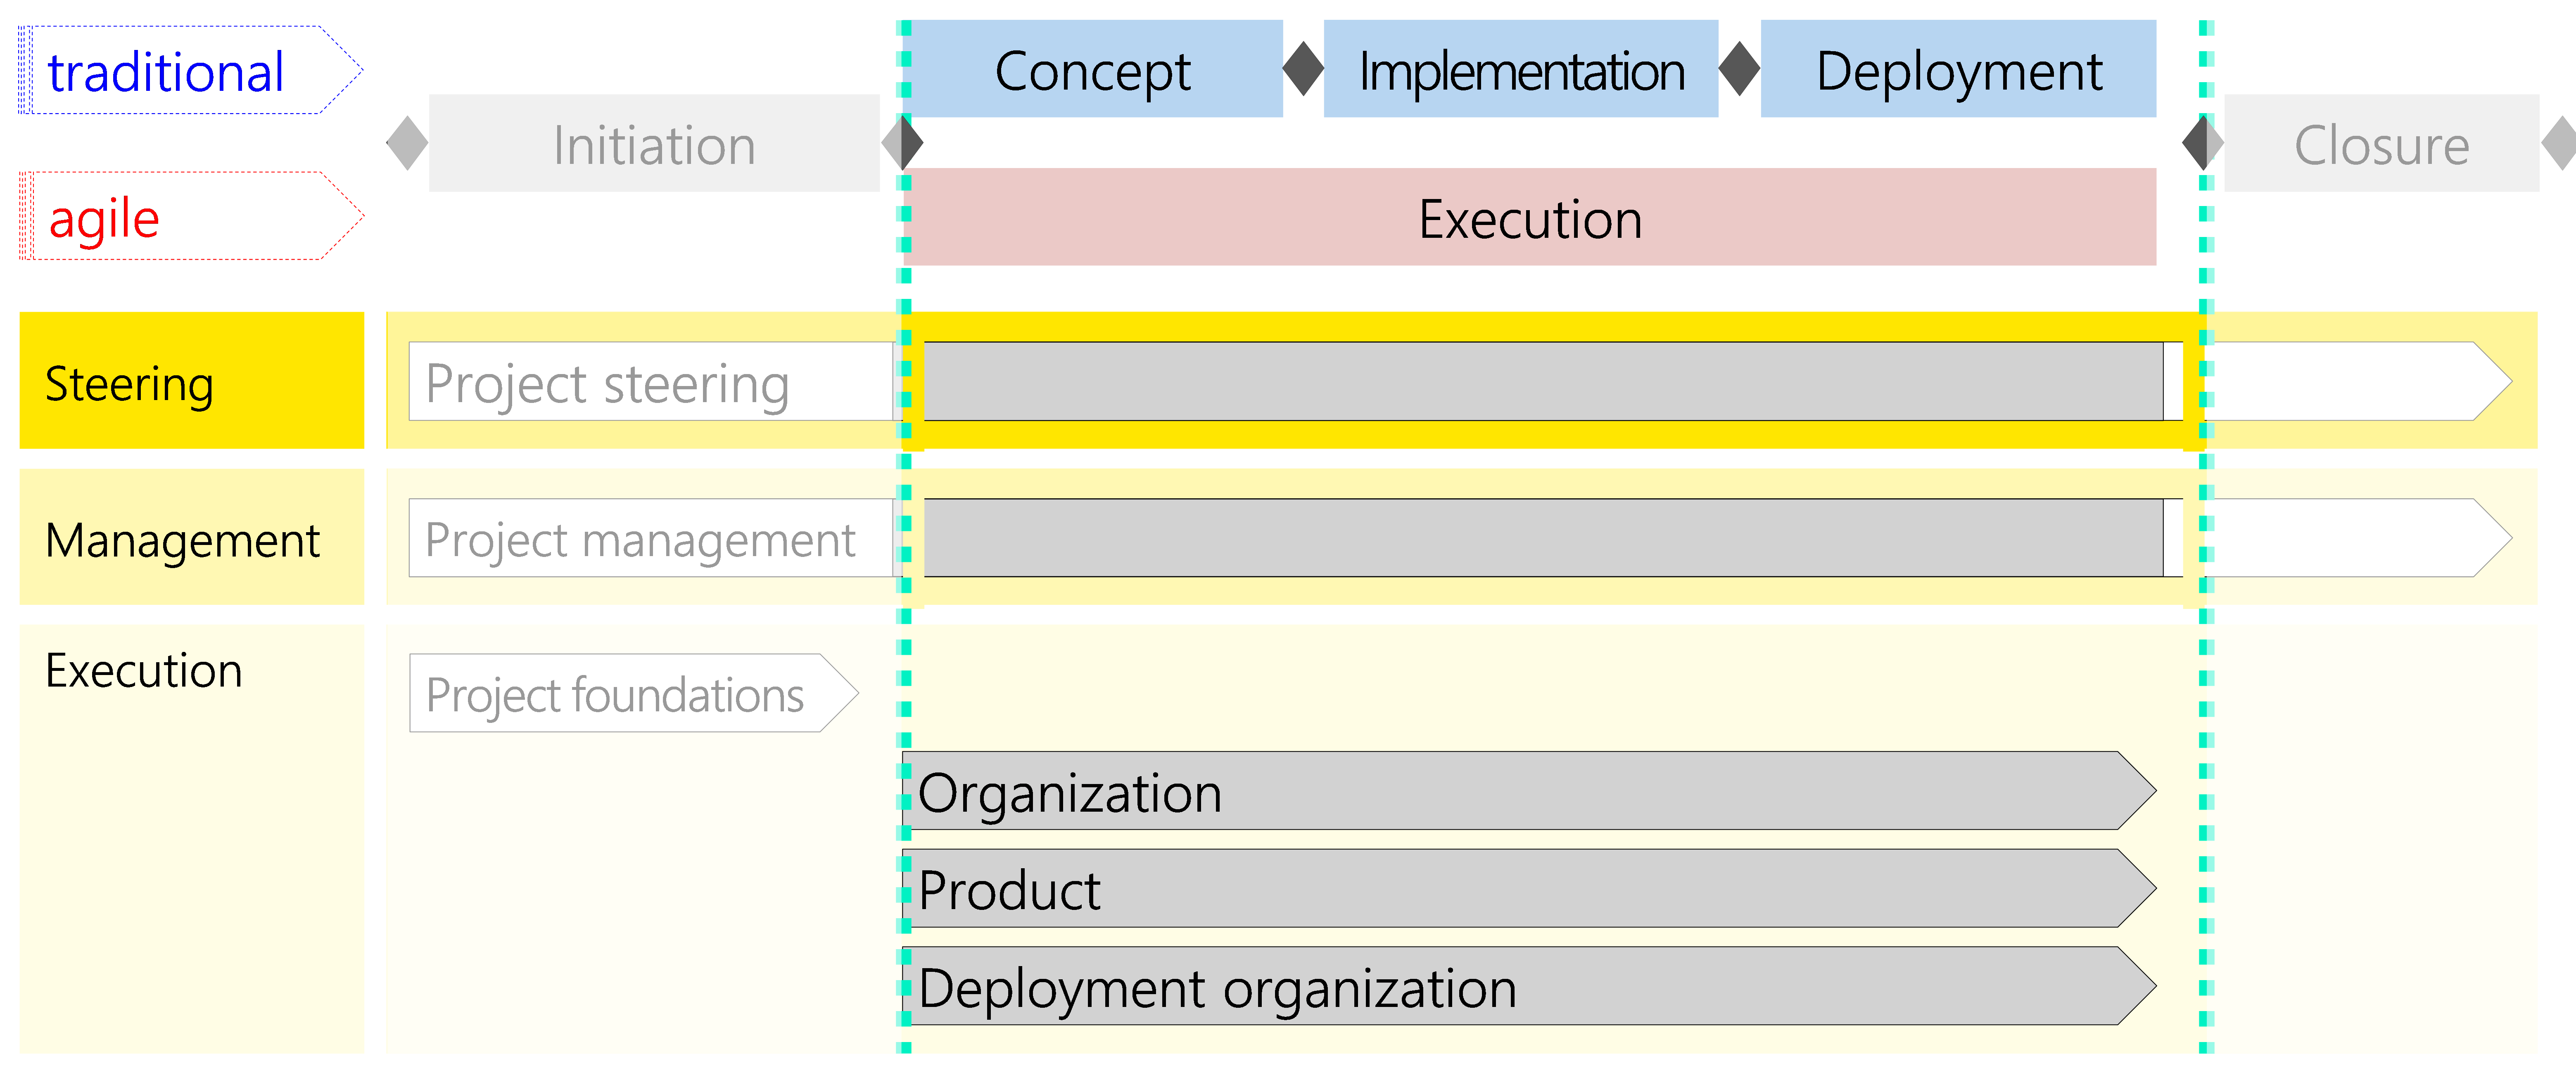 Figure 20: Modules in the context of the service/product development scenario